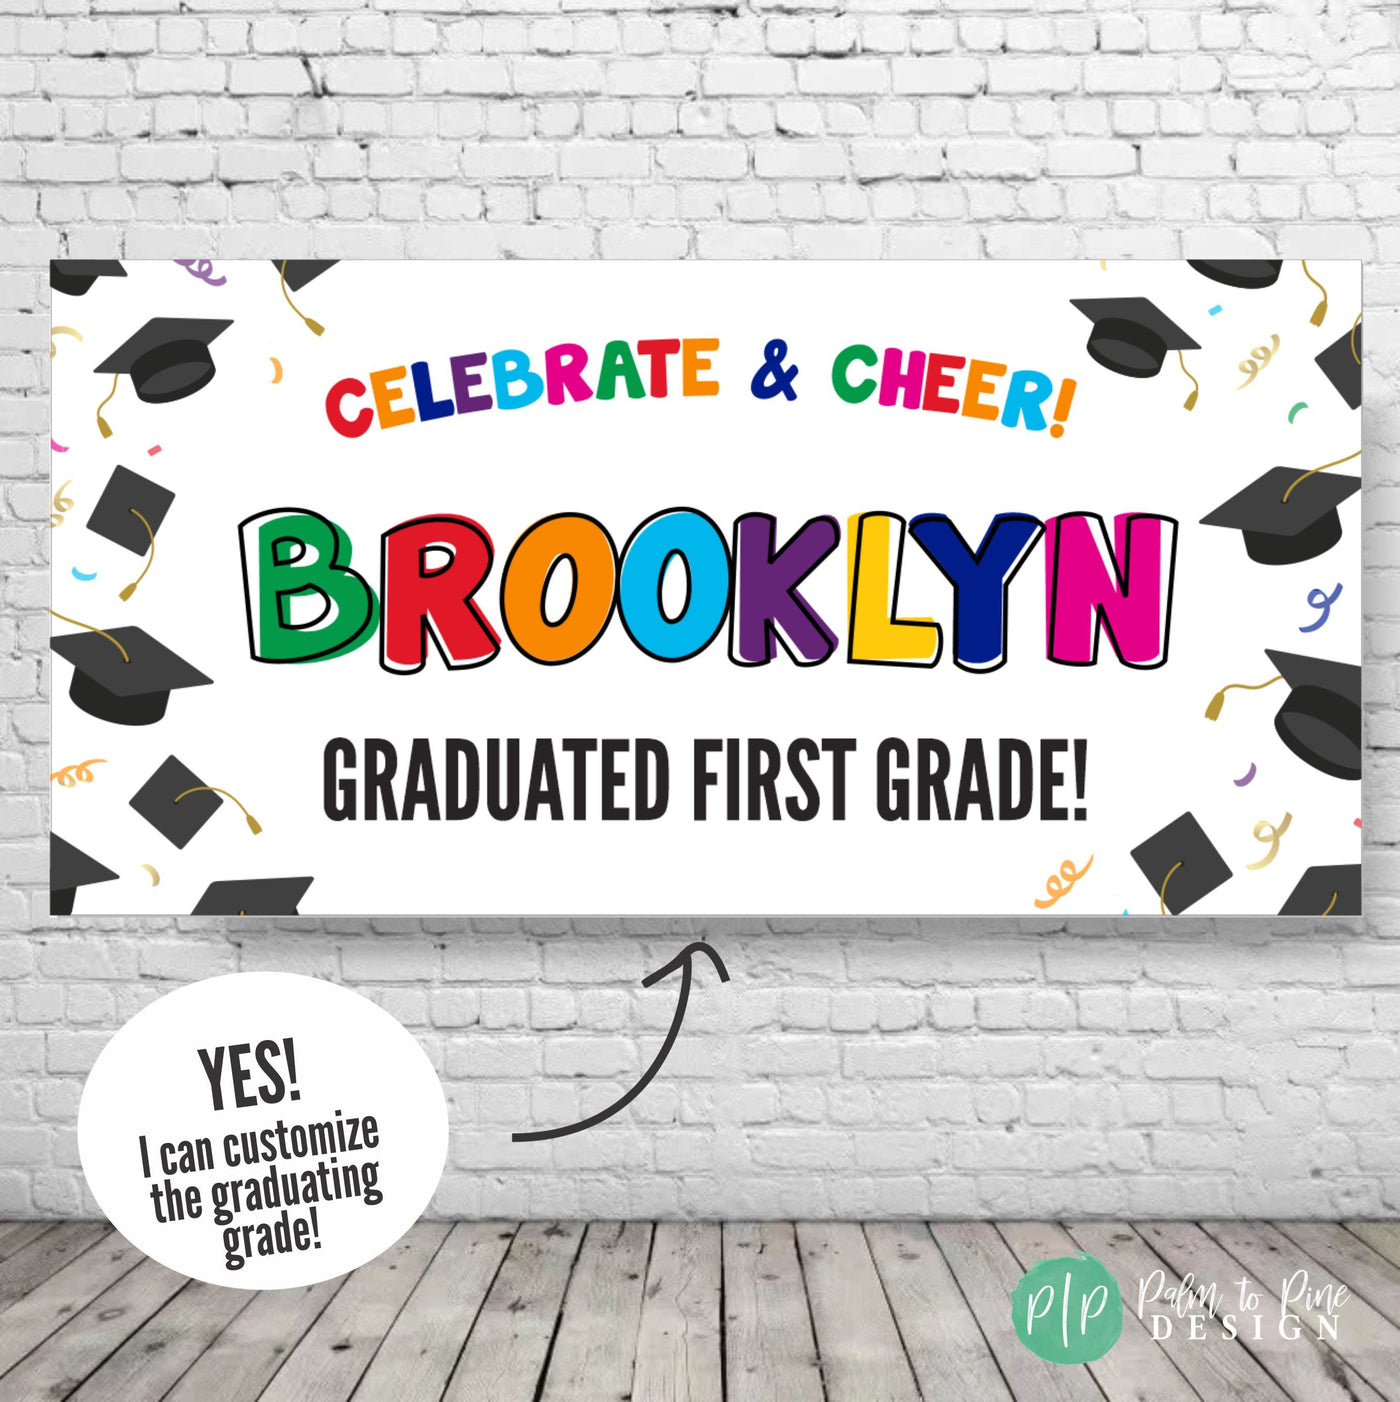 Elementary Graduation Banner, Graduation Decor, Graduation Printable Backdrop, Graduation sign for yard, Vinyl Banner, Elementary grad sign